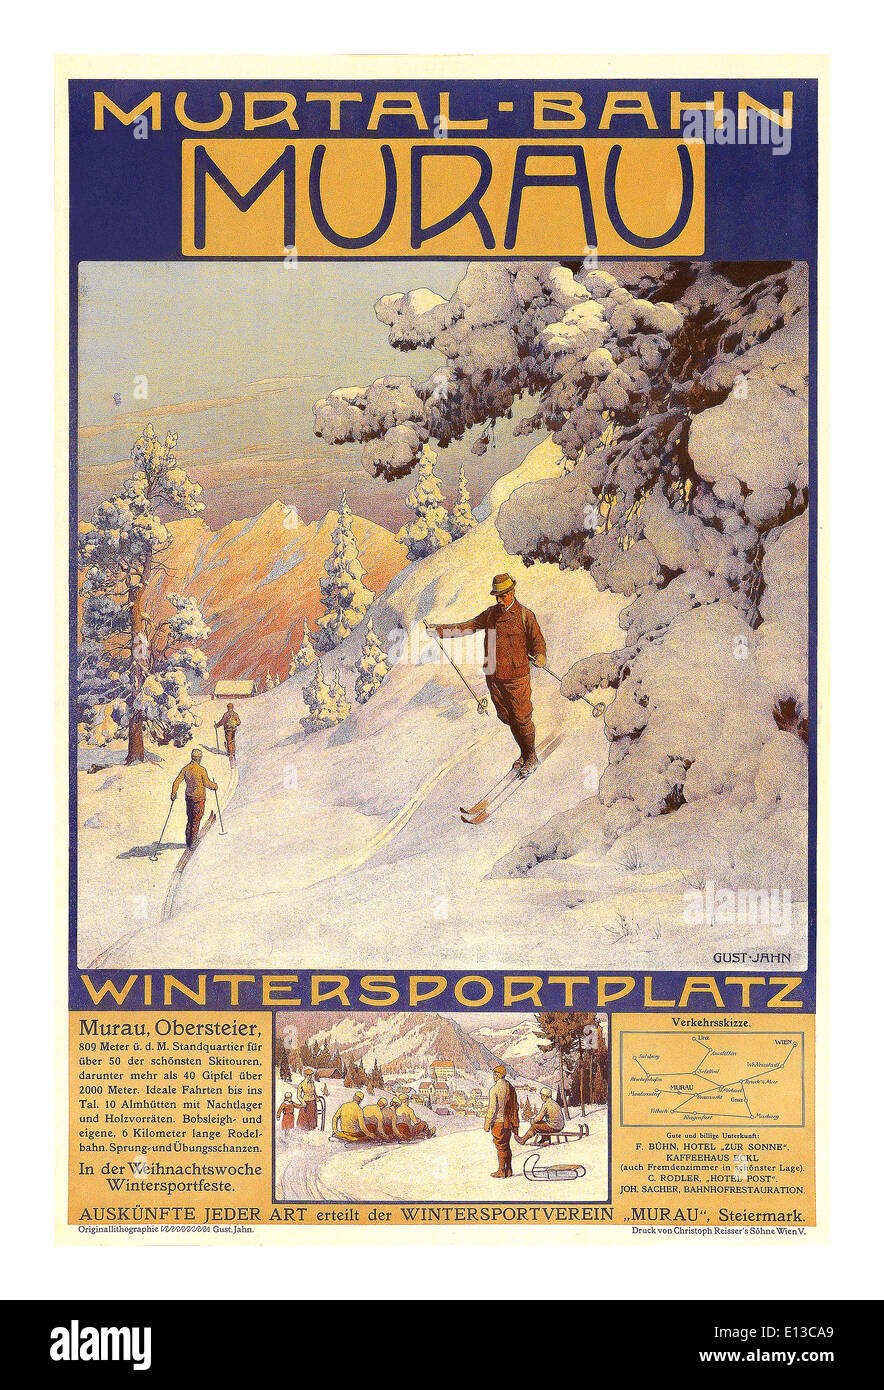 Vintage travel 1900's Advertising poster for the winter sports grounds Murtal-Bahn, Murau Stock Photo